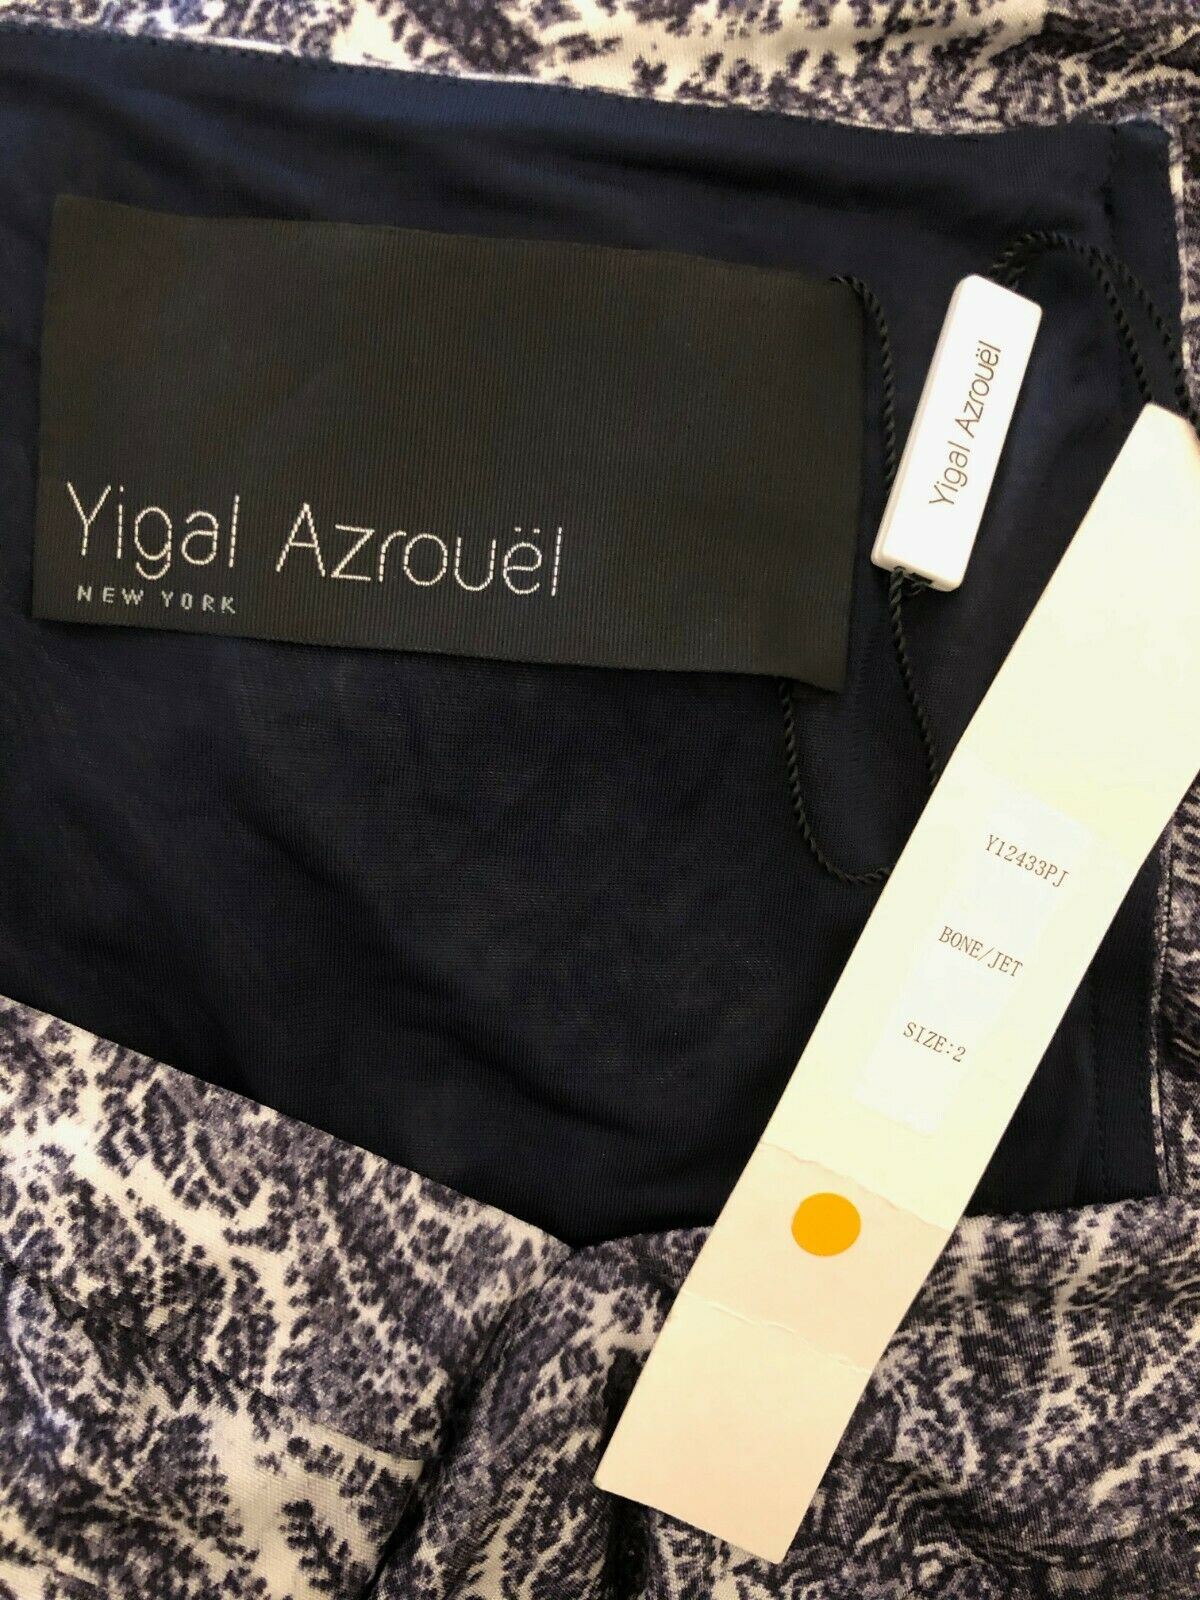 Yigal Azrouel Silk Paisley Print Kimono Style Ruched Dress UK 10 US 6 EU 38 BNWT RRP £780 Timeless Fashions